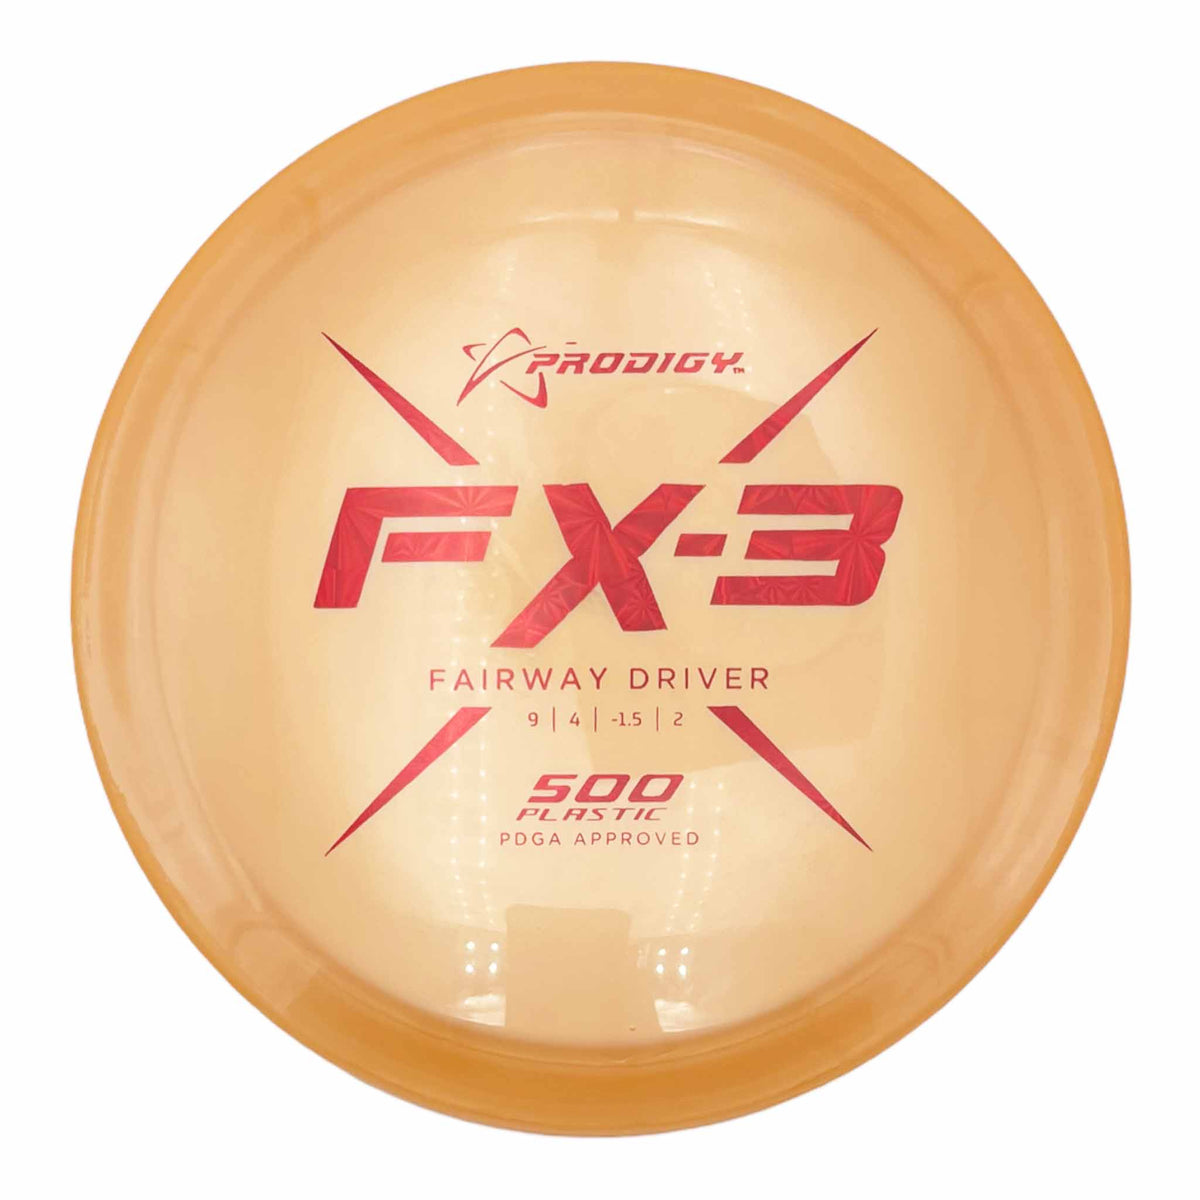 Prodigy 500 FX-3 fairway driver - Orange / Red